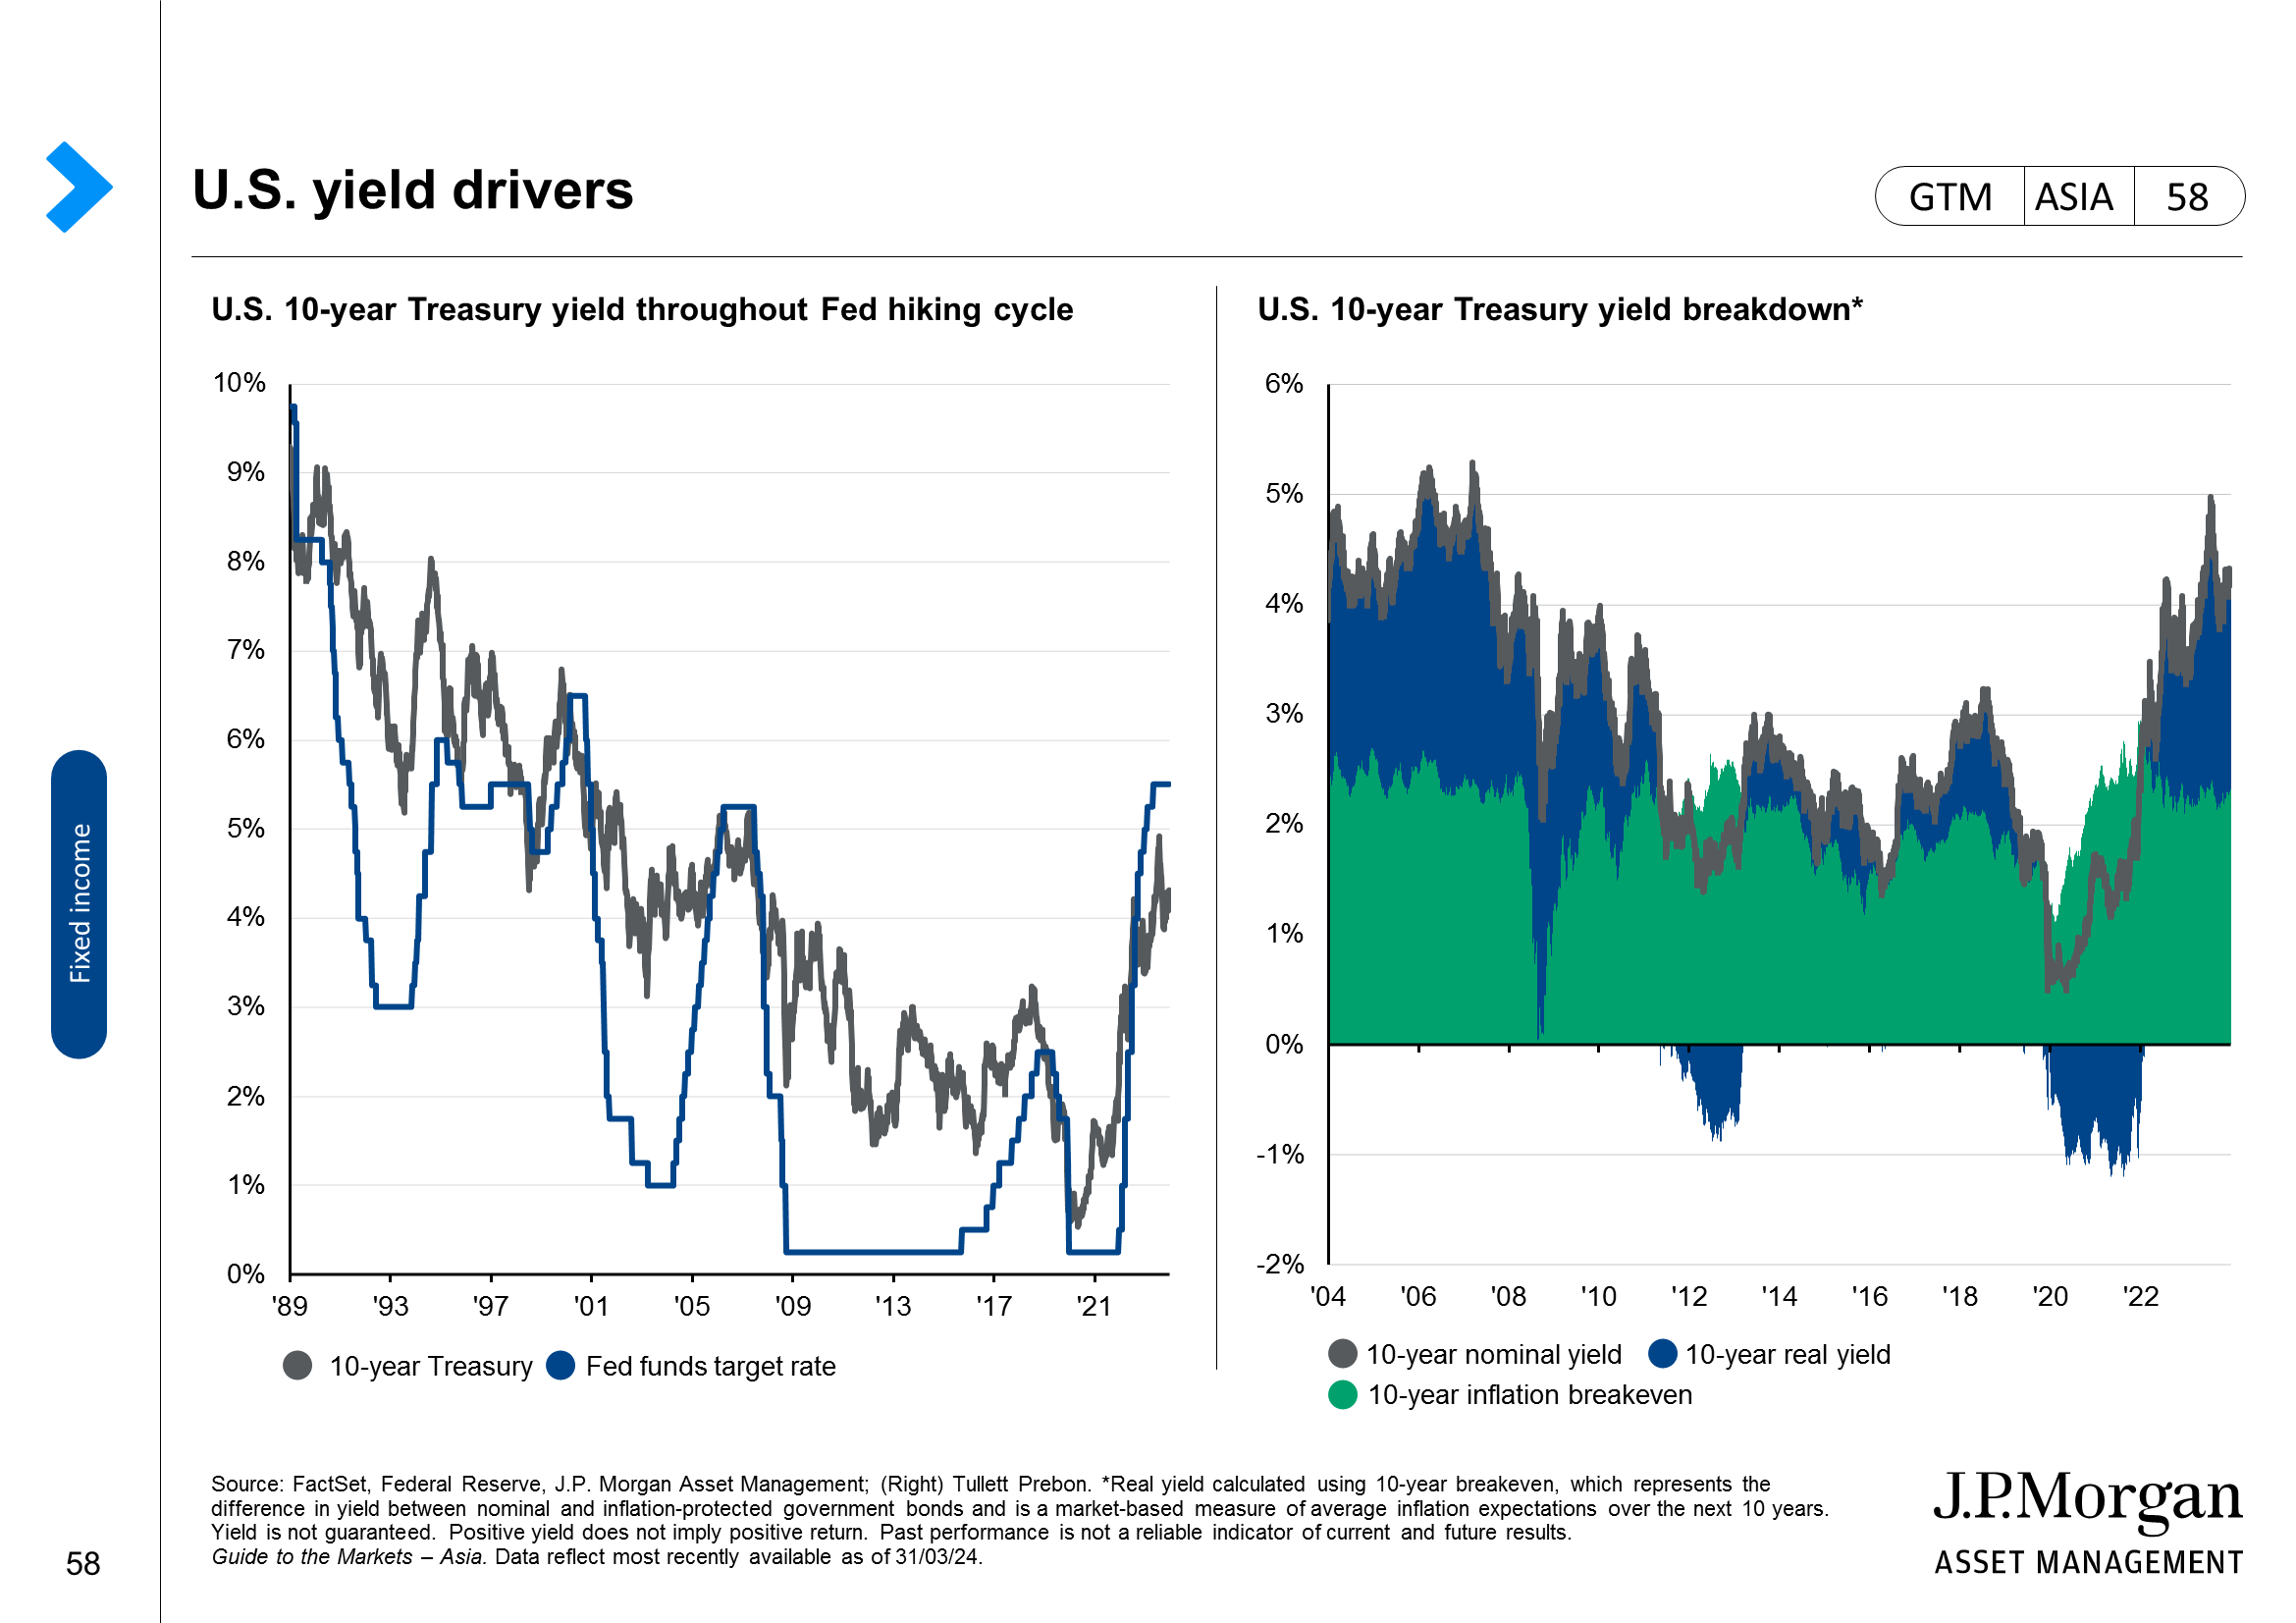 U.S. high yield bond fundamentals